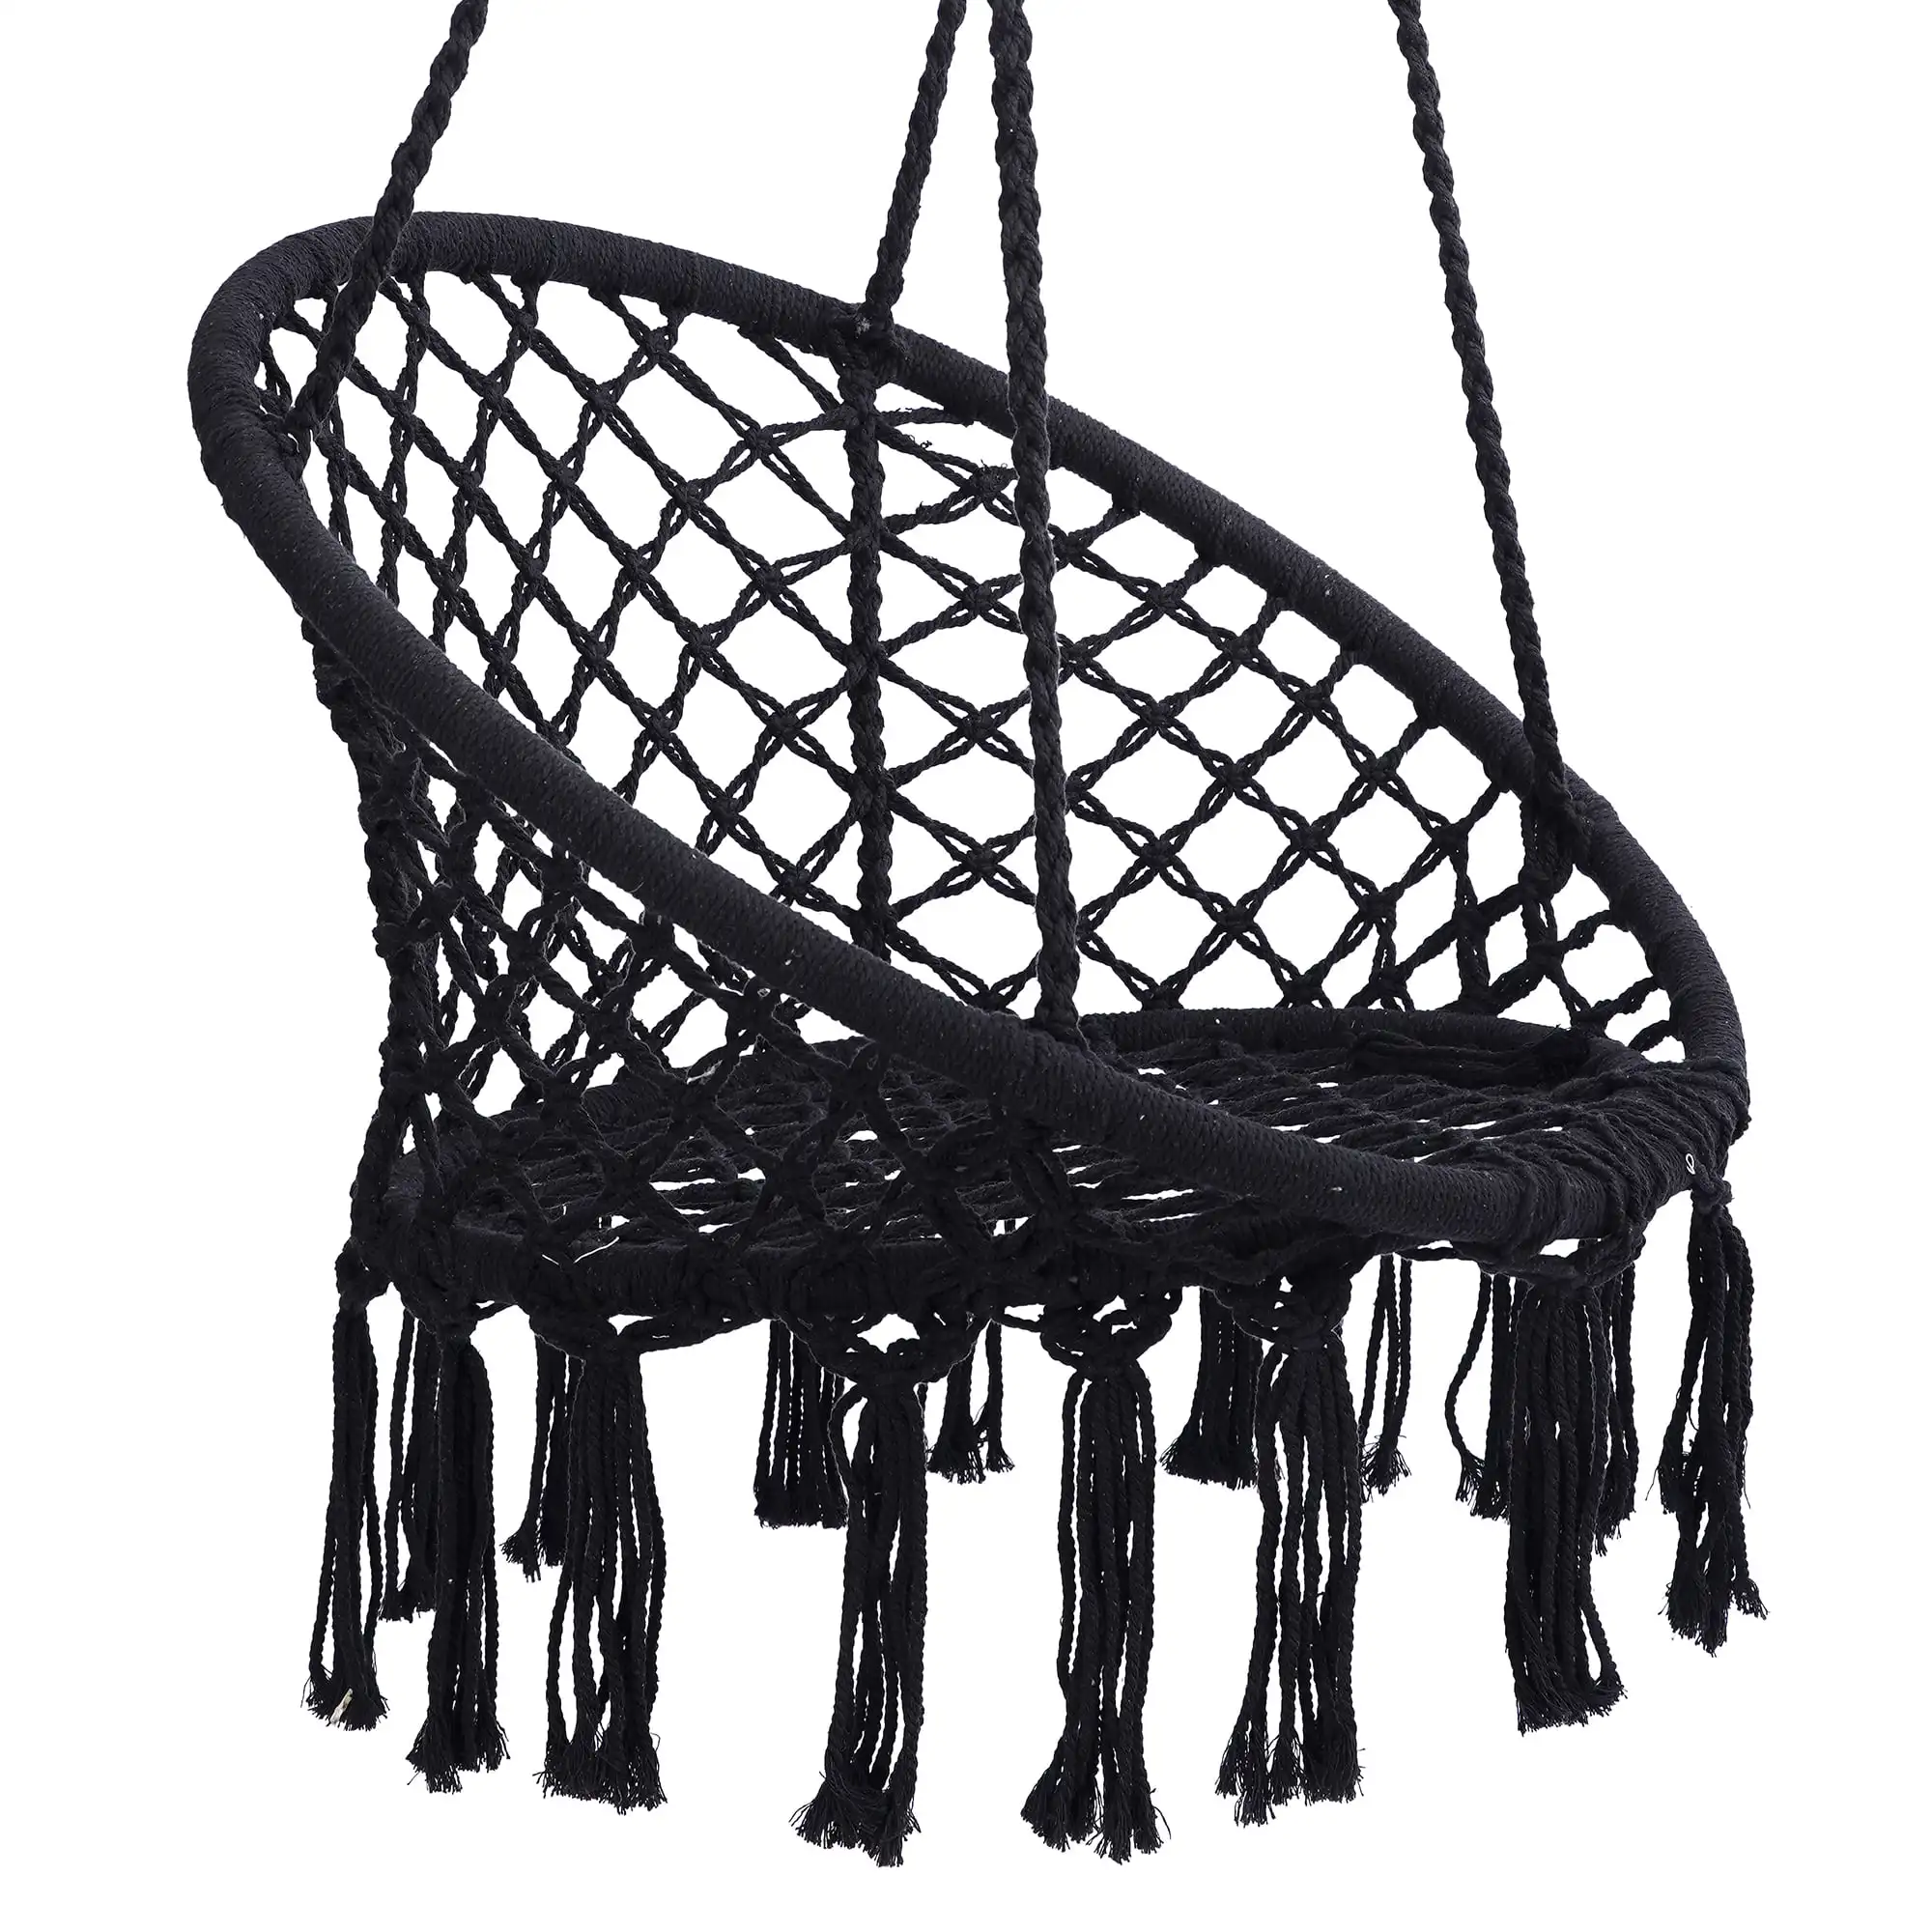 Hammock Chair - Hanging Hammock Swing Chair for Indoor and Outdoor - Black 4